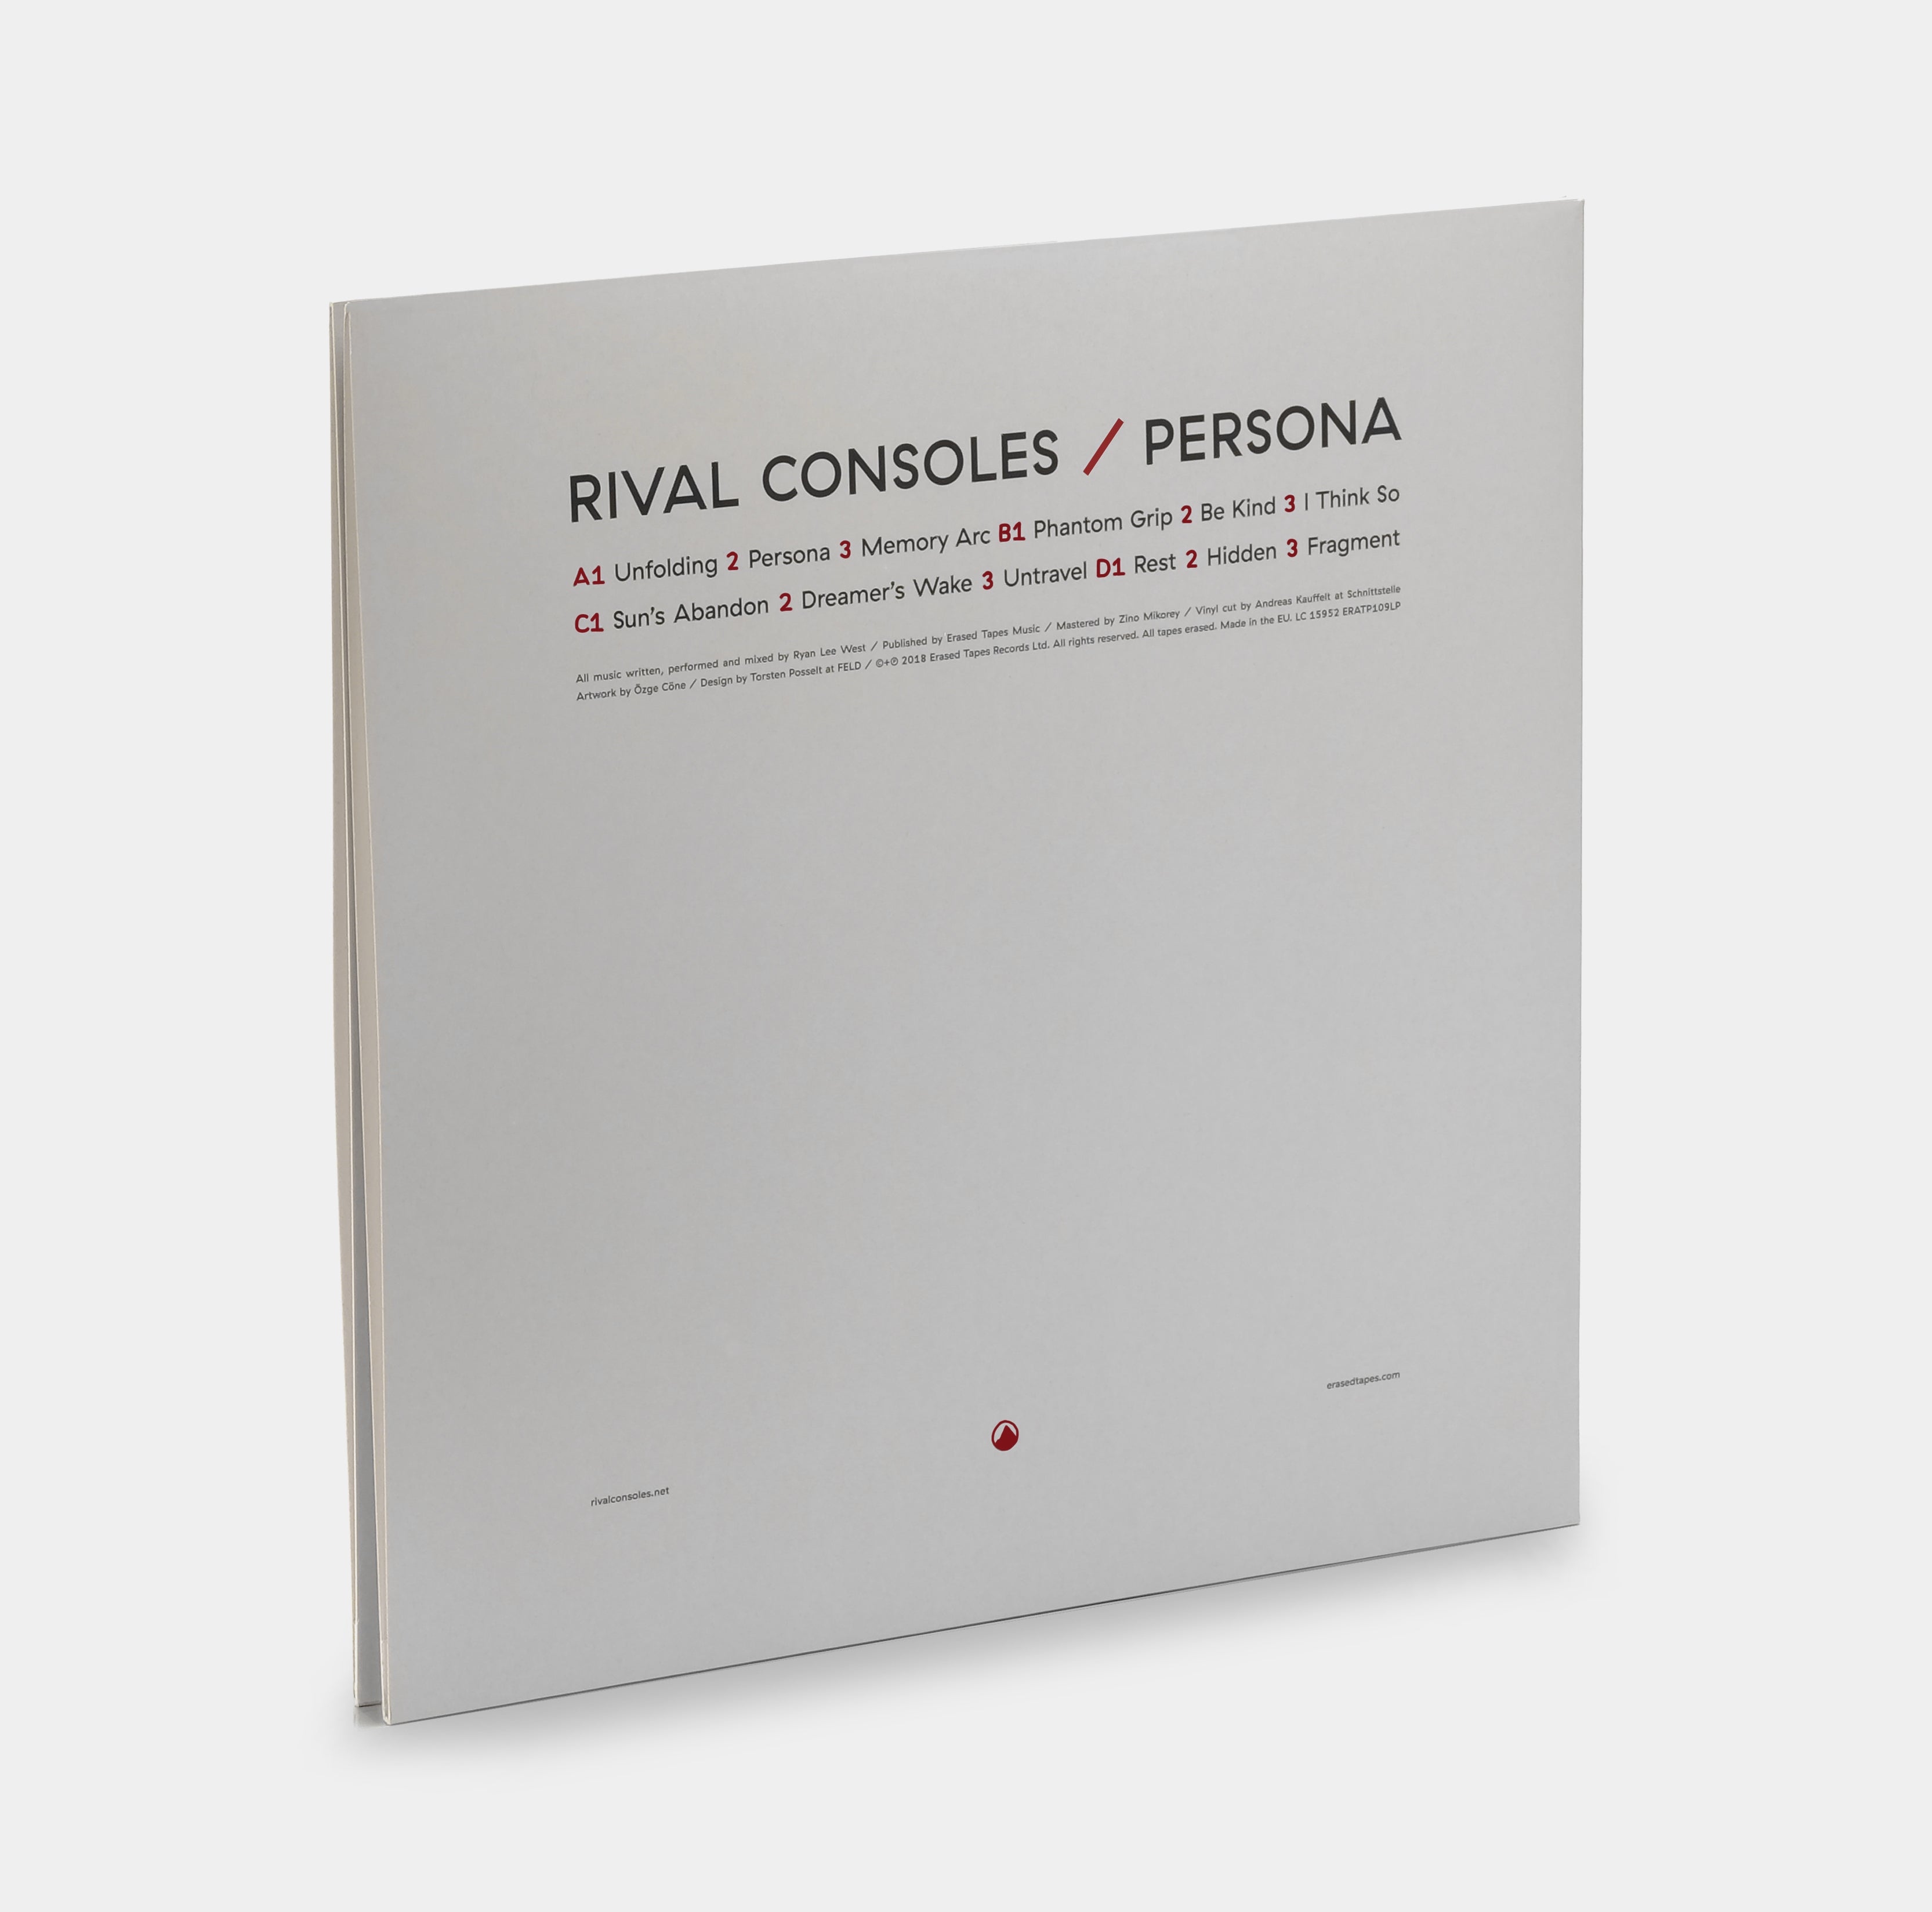 Rival Consoles - Persona 2xLP Vinyl Record